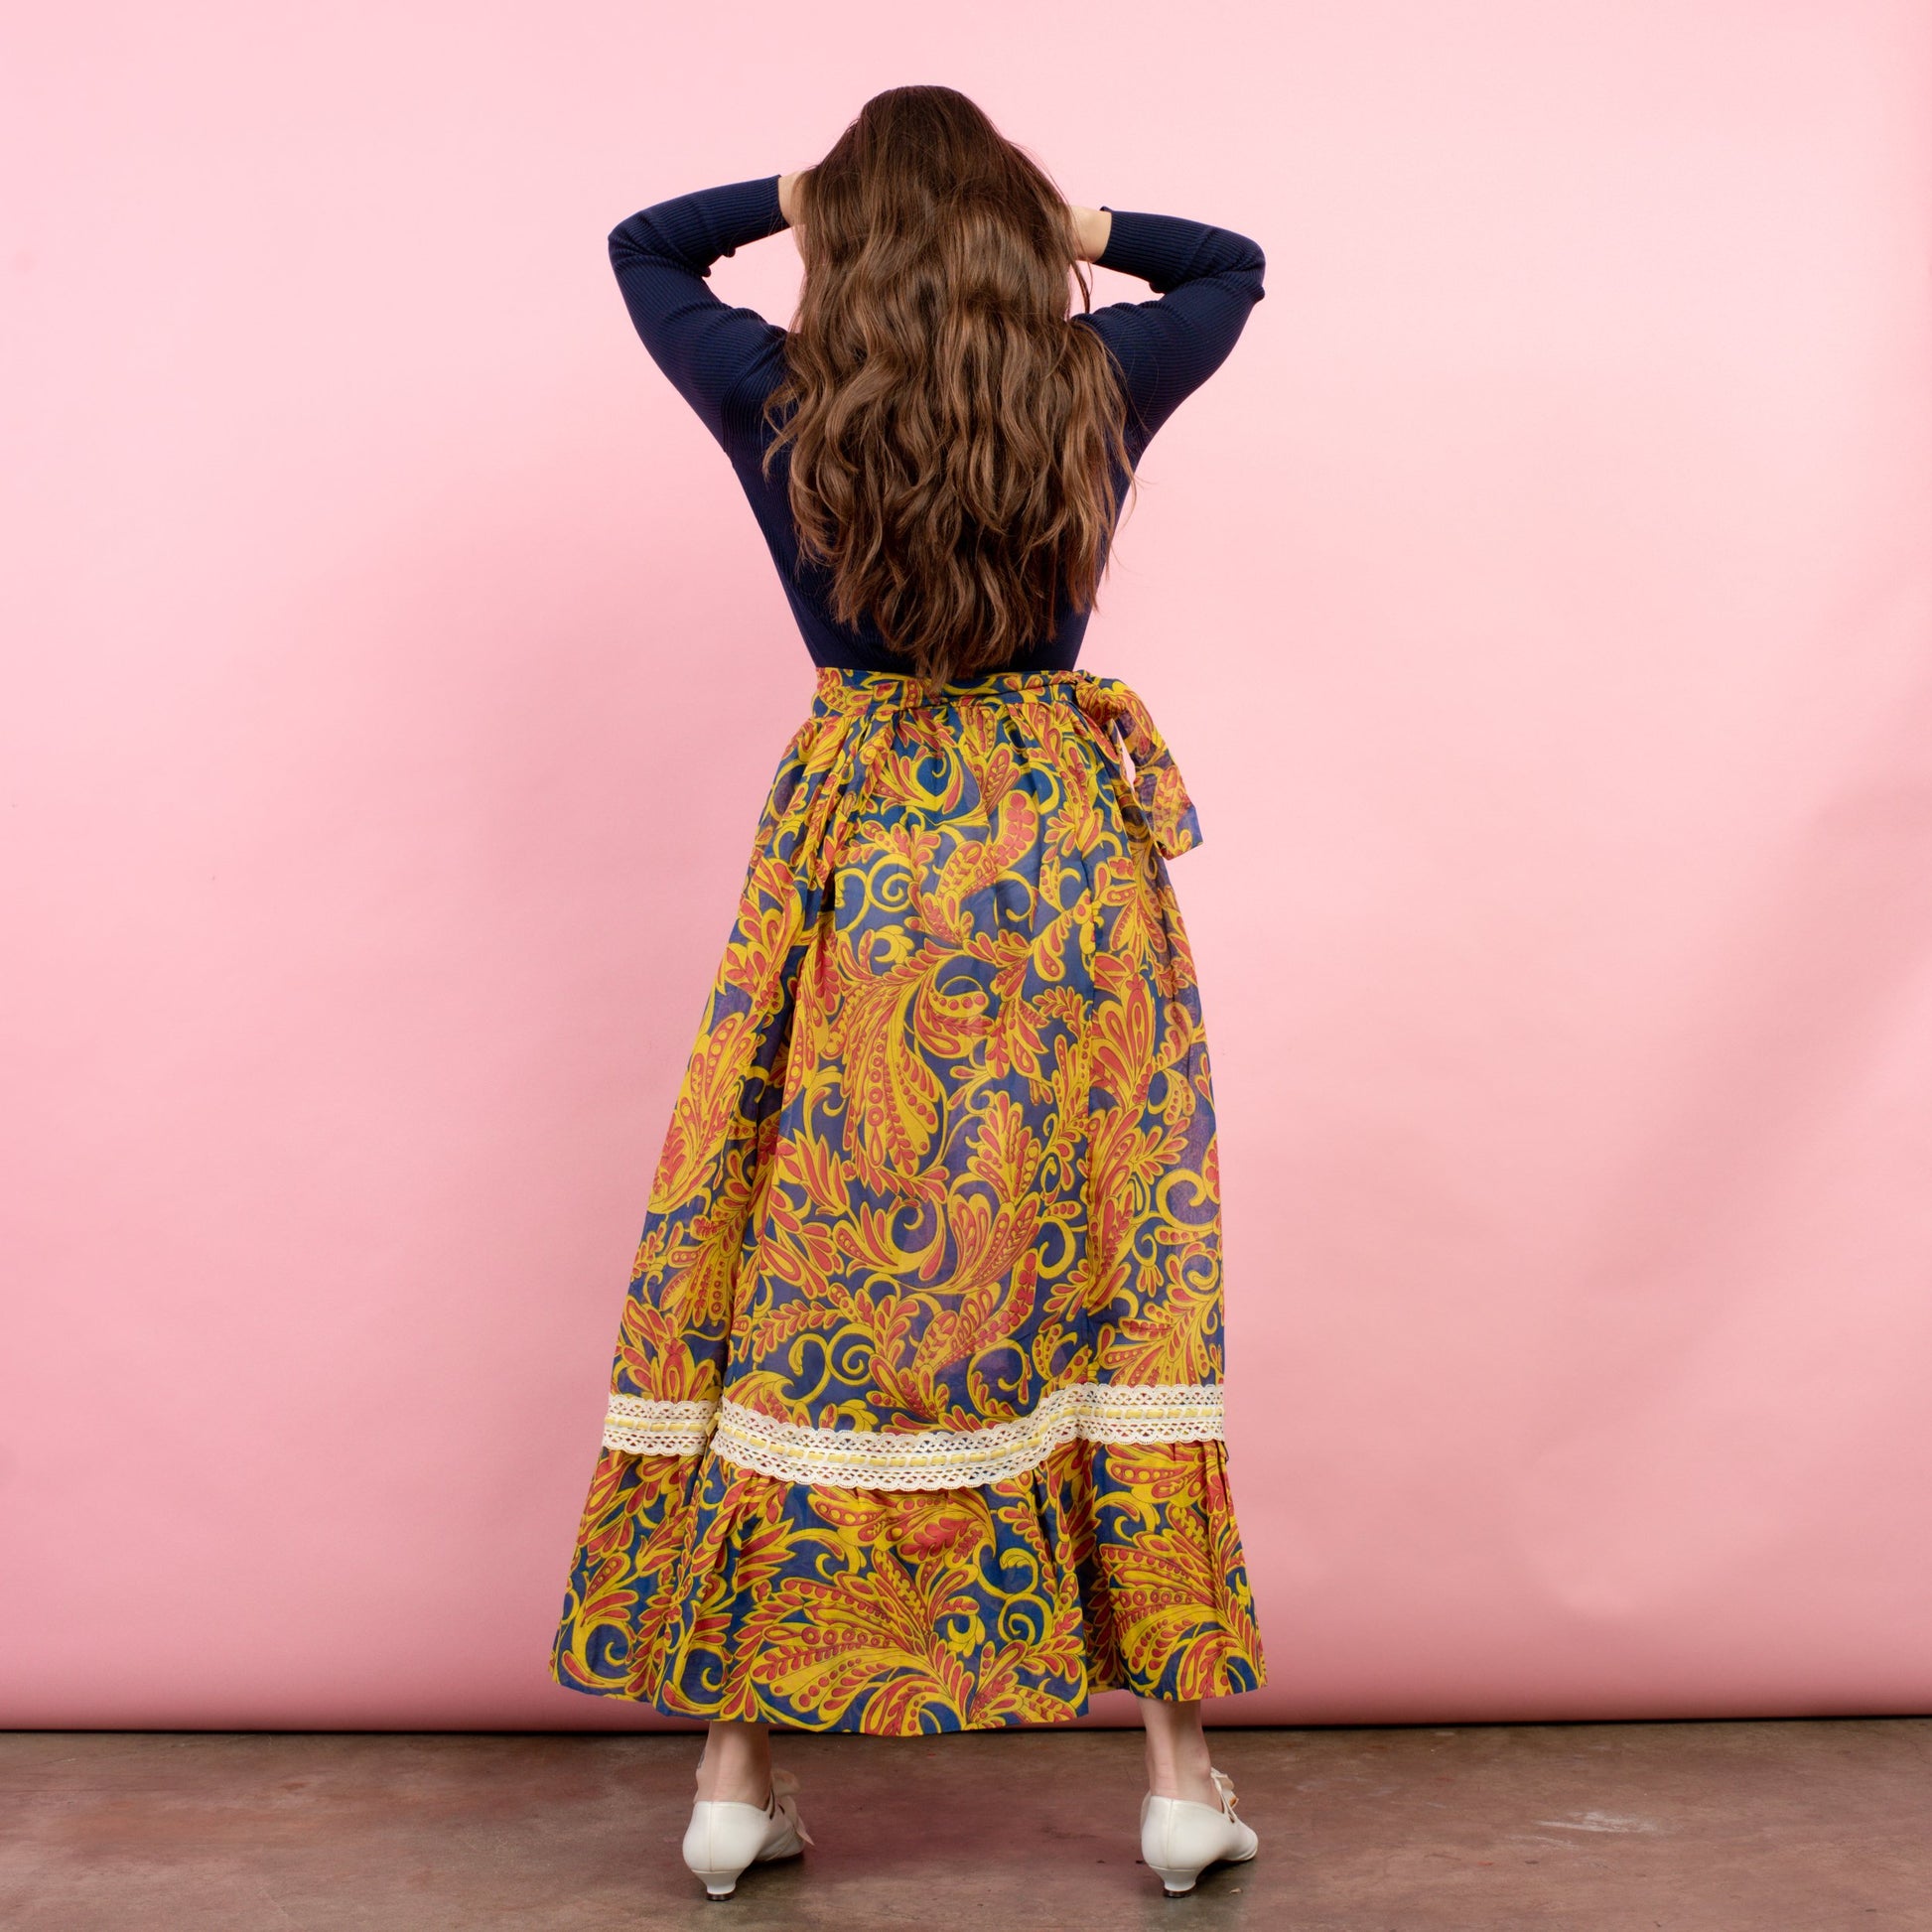 Vintage Semi-Sheer Floral Wrap Maxi Skirt  / S/M/L - Closed Caption